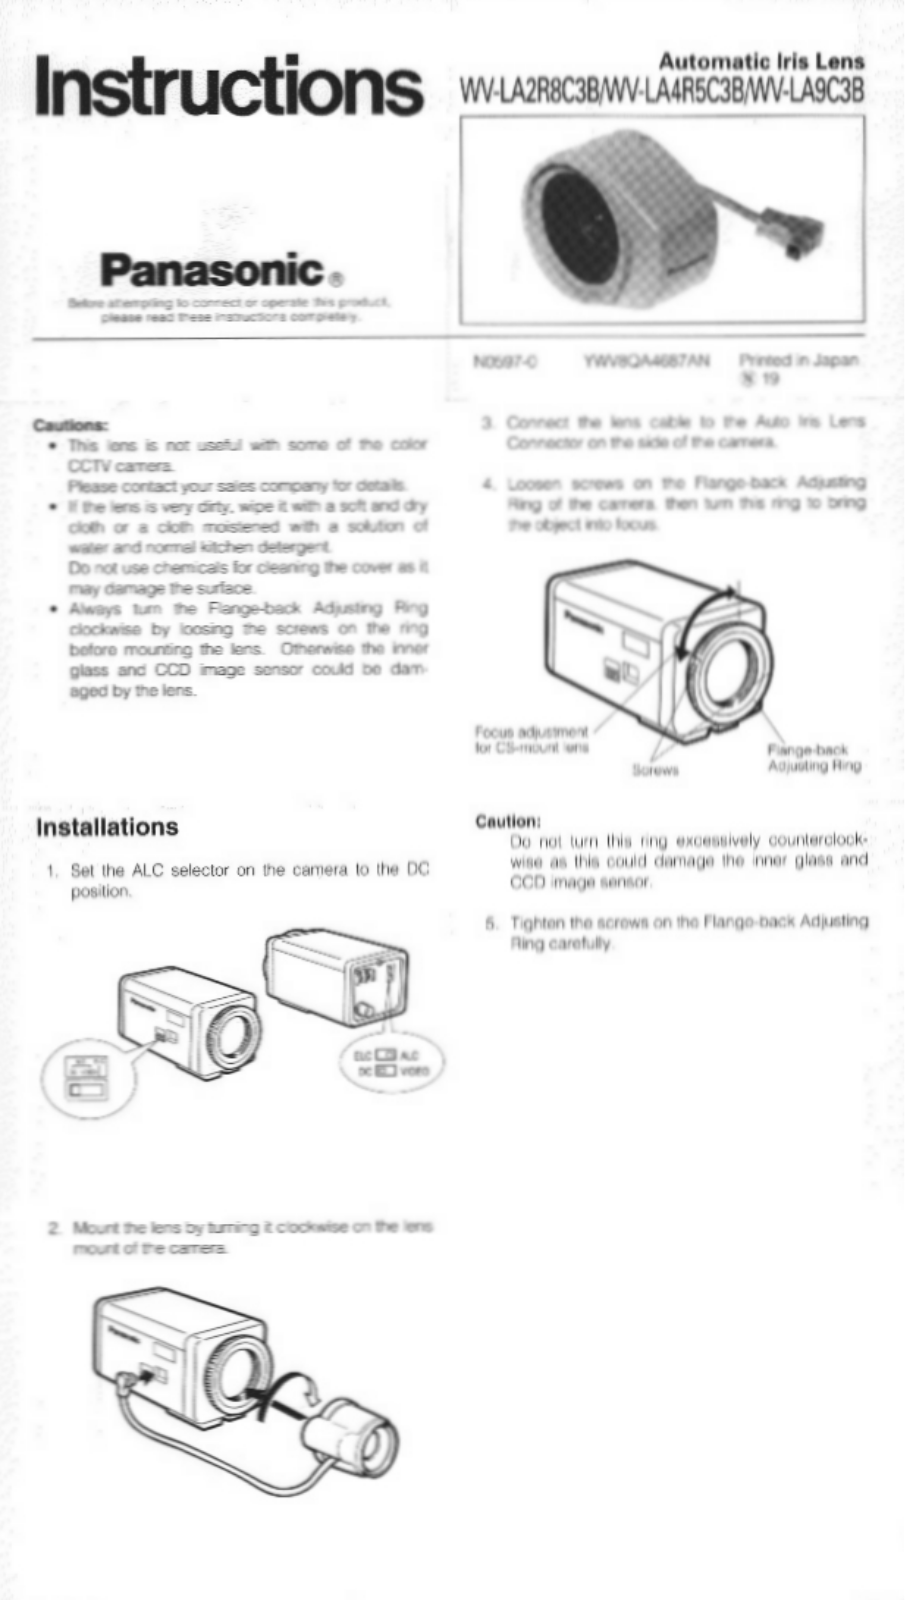 Panasonic WV-LA2R8C3B, WV-LA9C3B, Wv-La4r5c3b User Manual